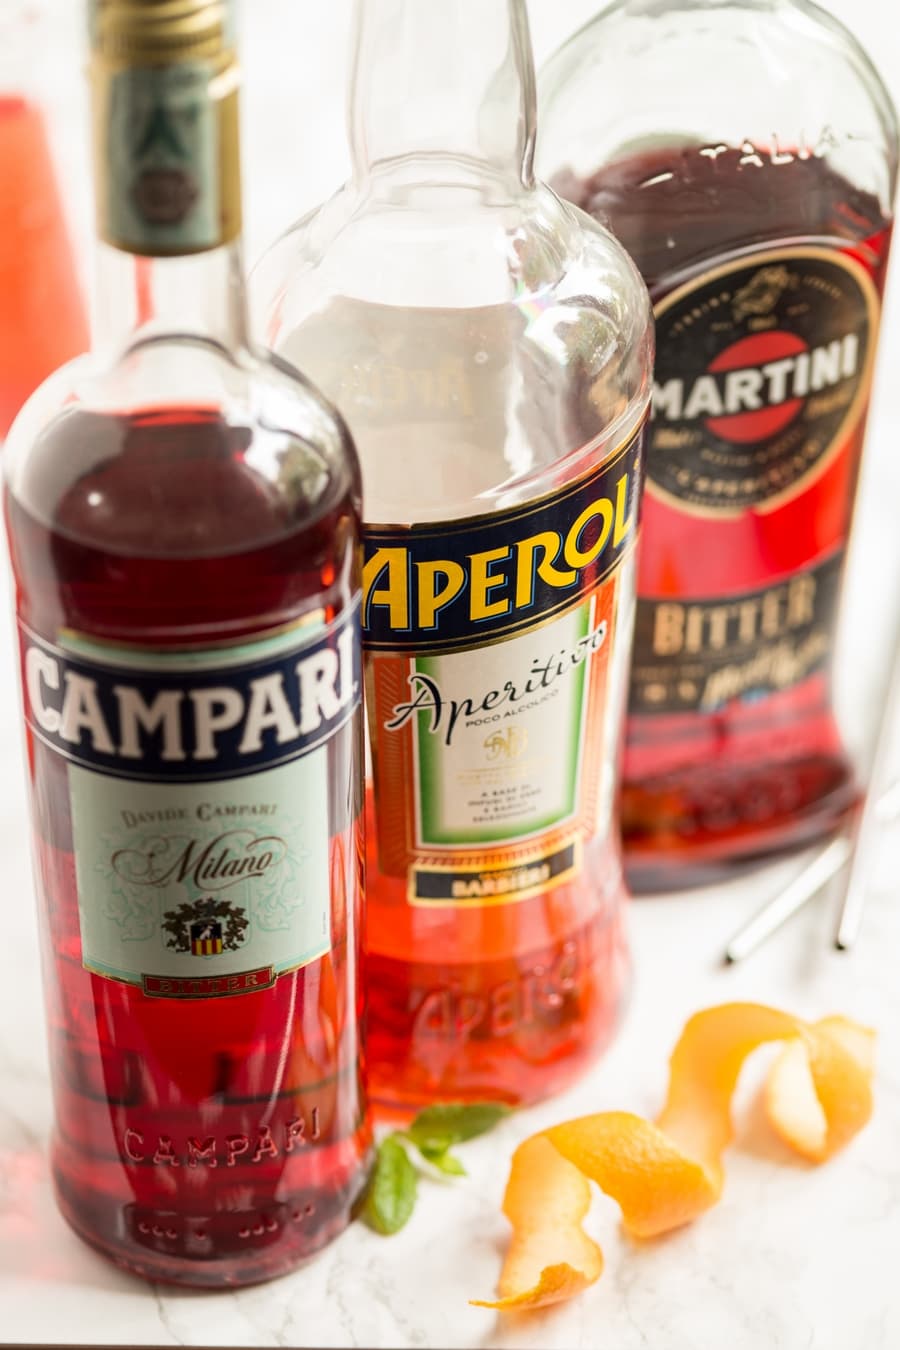 Three Italian bitters bottled: Campari, Aperol and Martini.